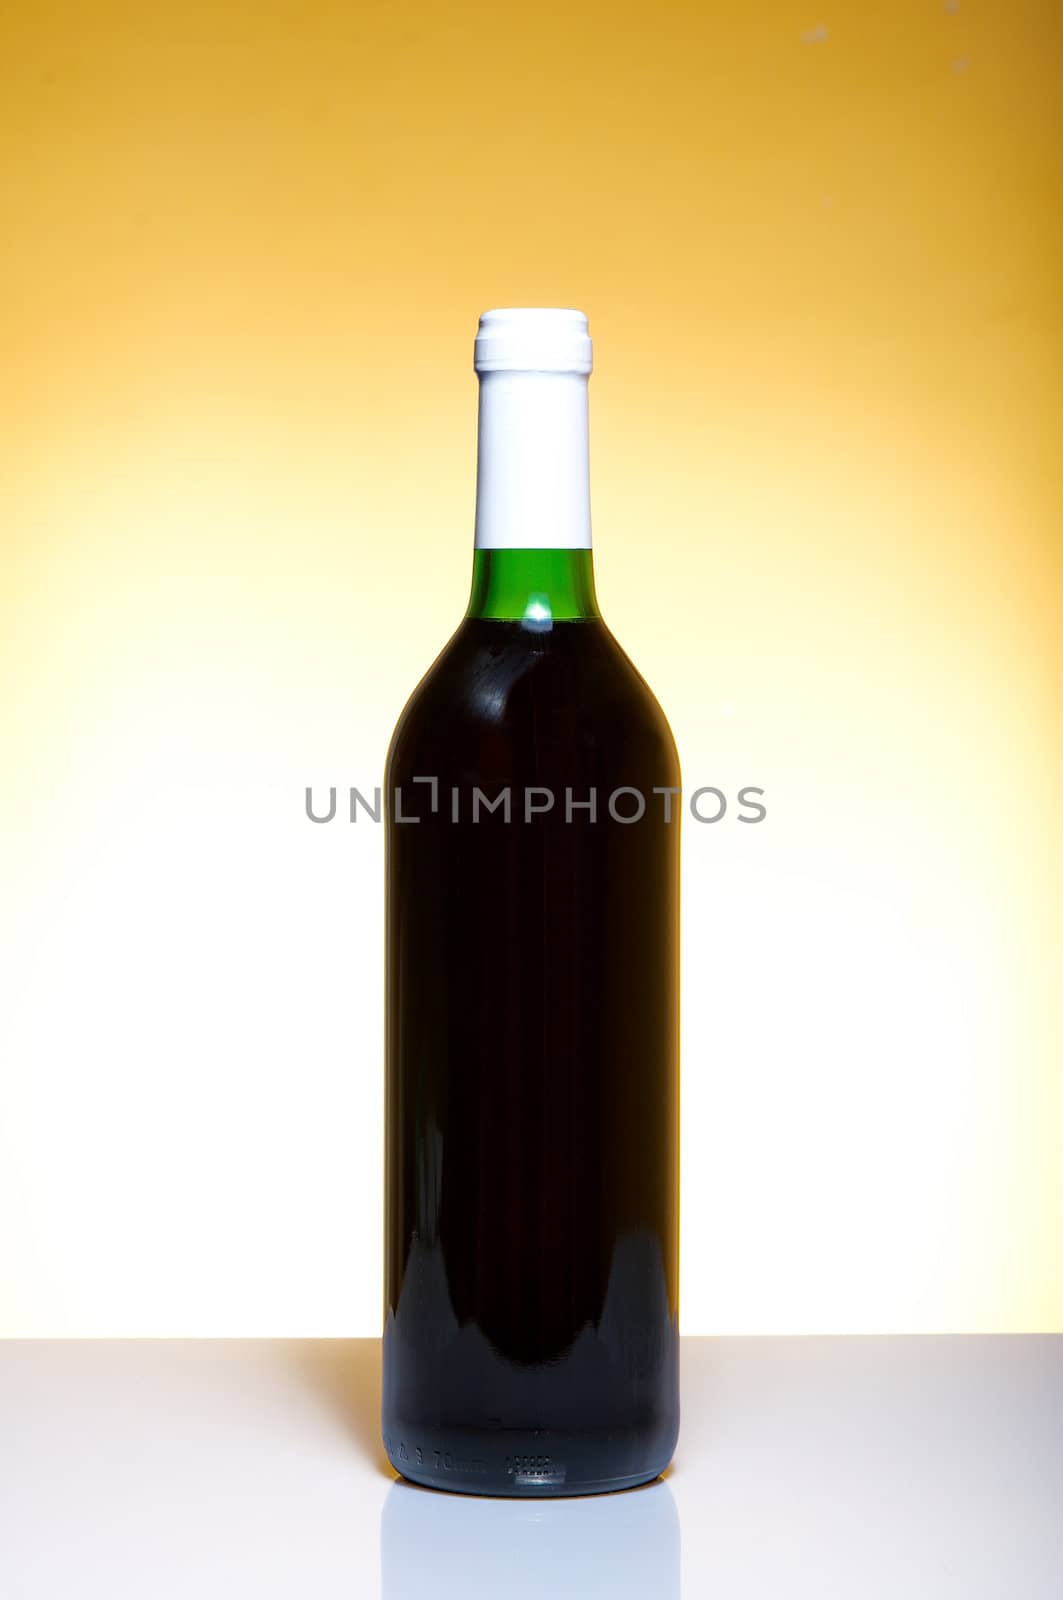 Vine bottle on orange background by anderm